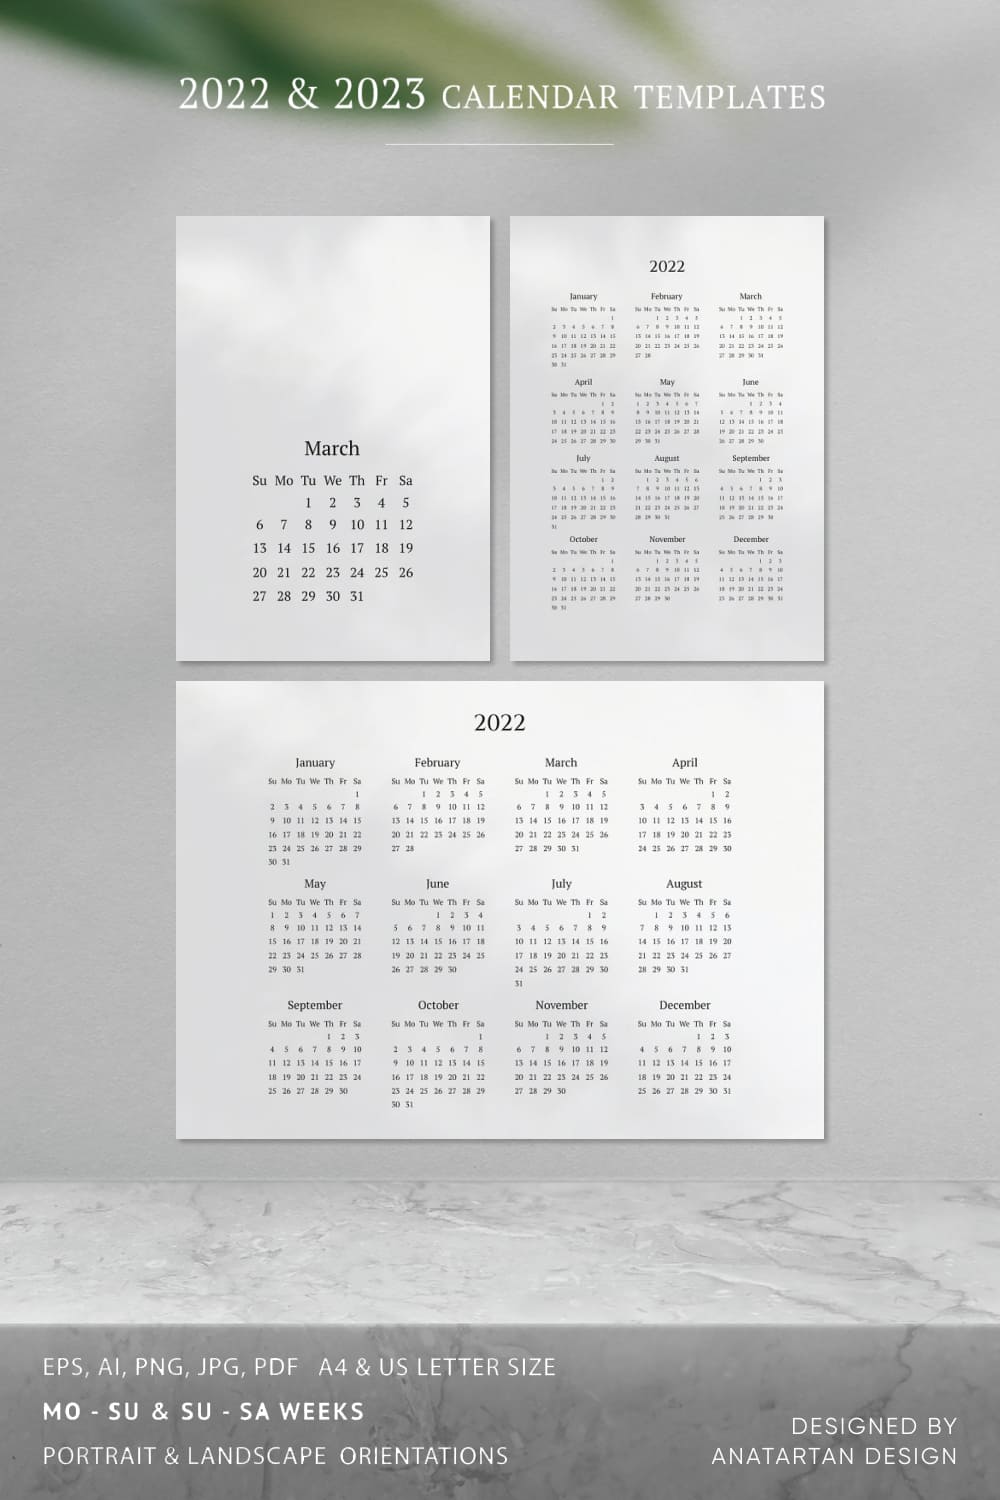 2022 2023 calendar templates pinterest image.